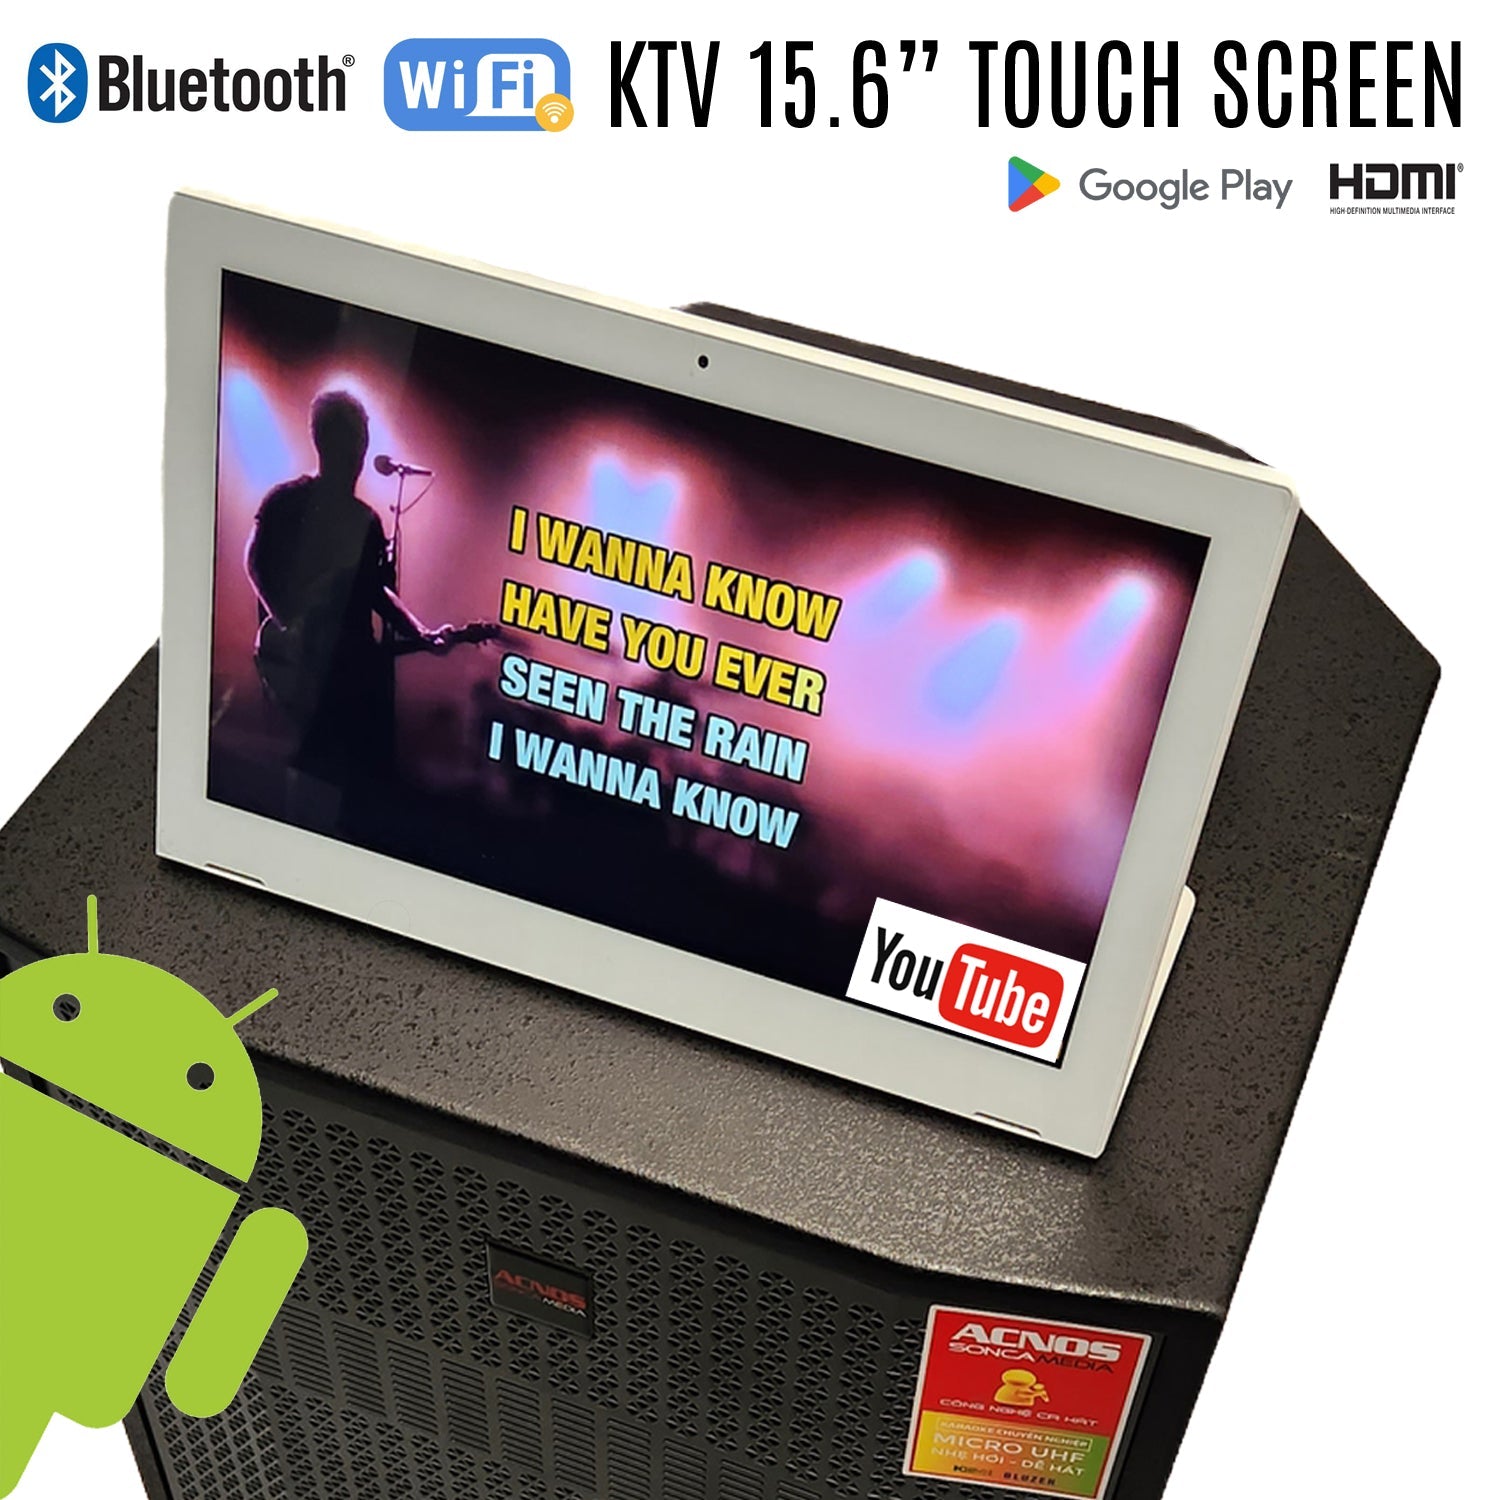 15.6" KTV Touch Screen & KBEATBOX Karaoke Sound System - Karaoke Home Entertainment